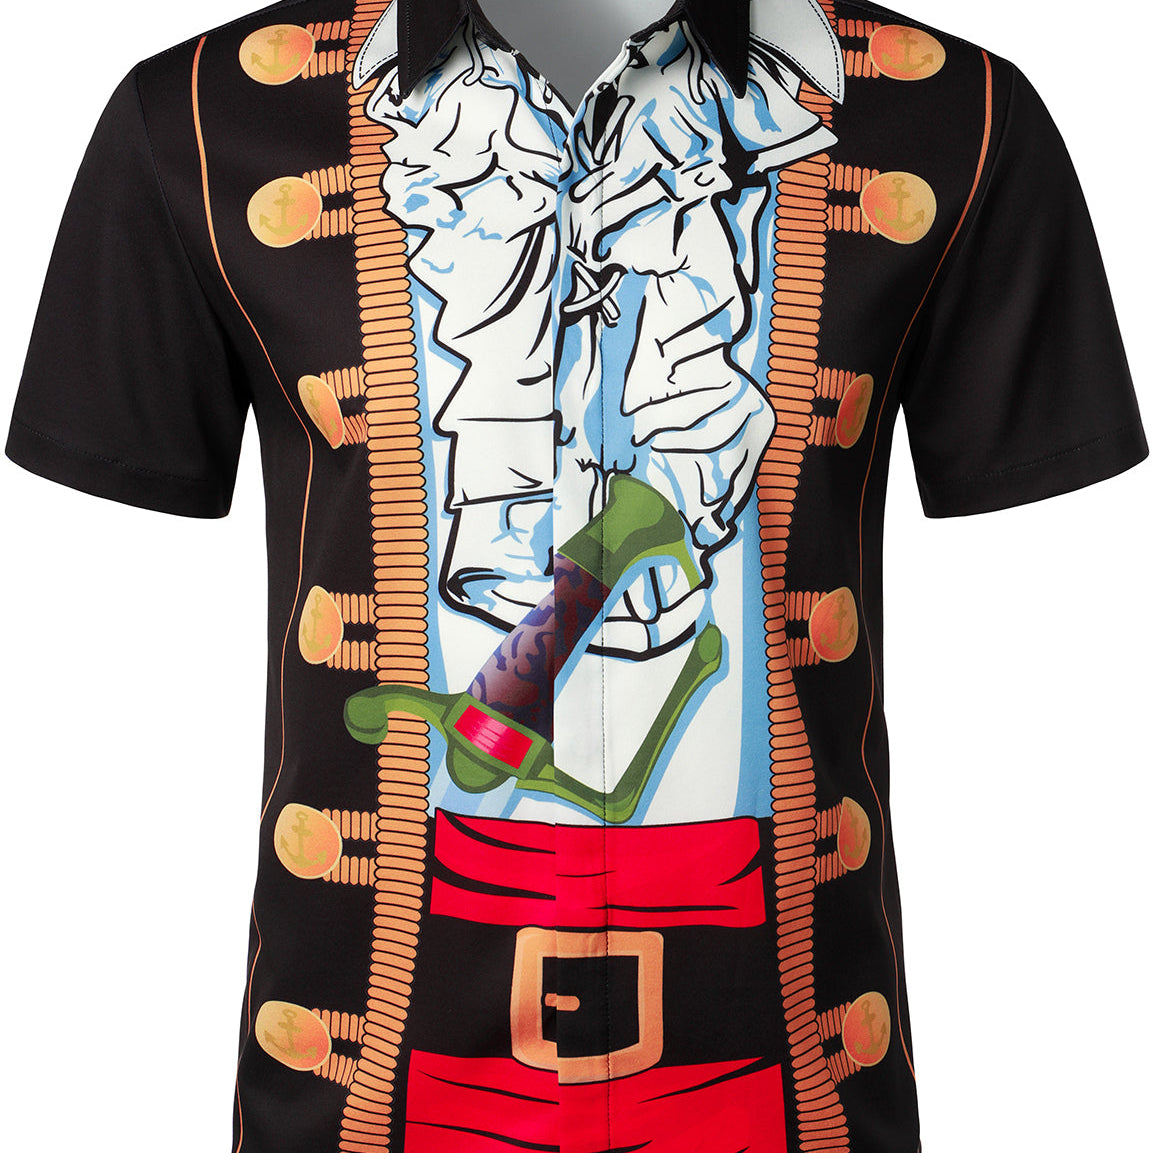 Men's Pirate Themed Party Costume Black Halloween Short Sleeve Shirt